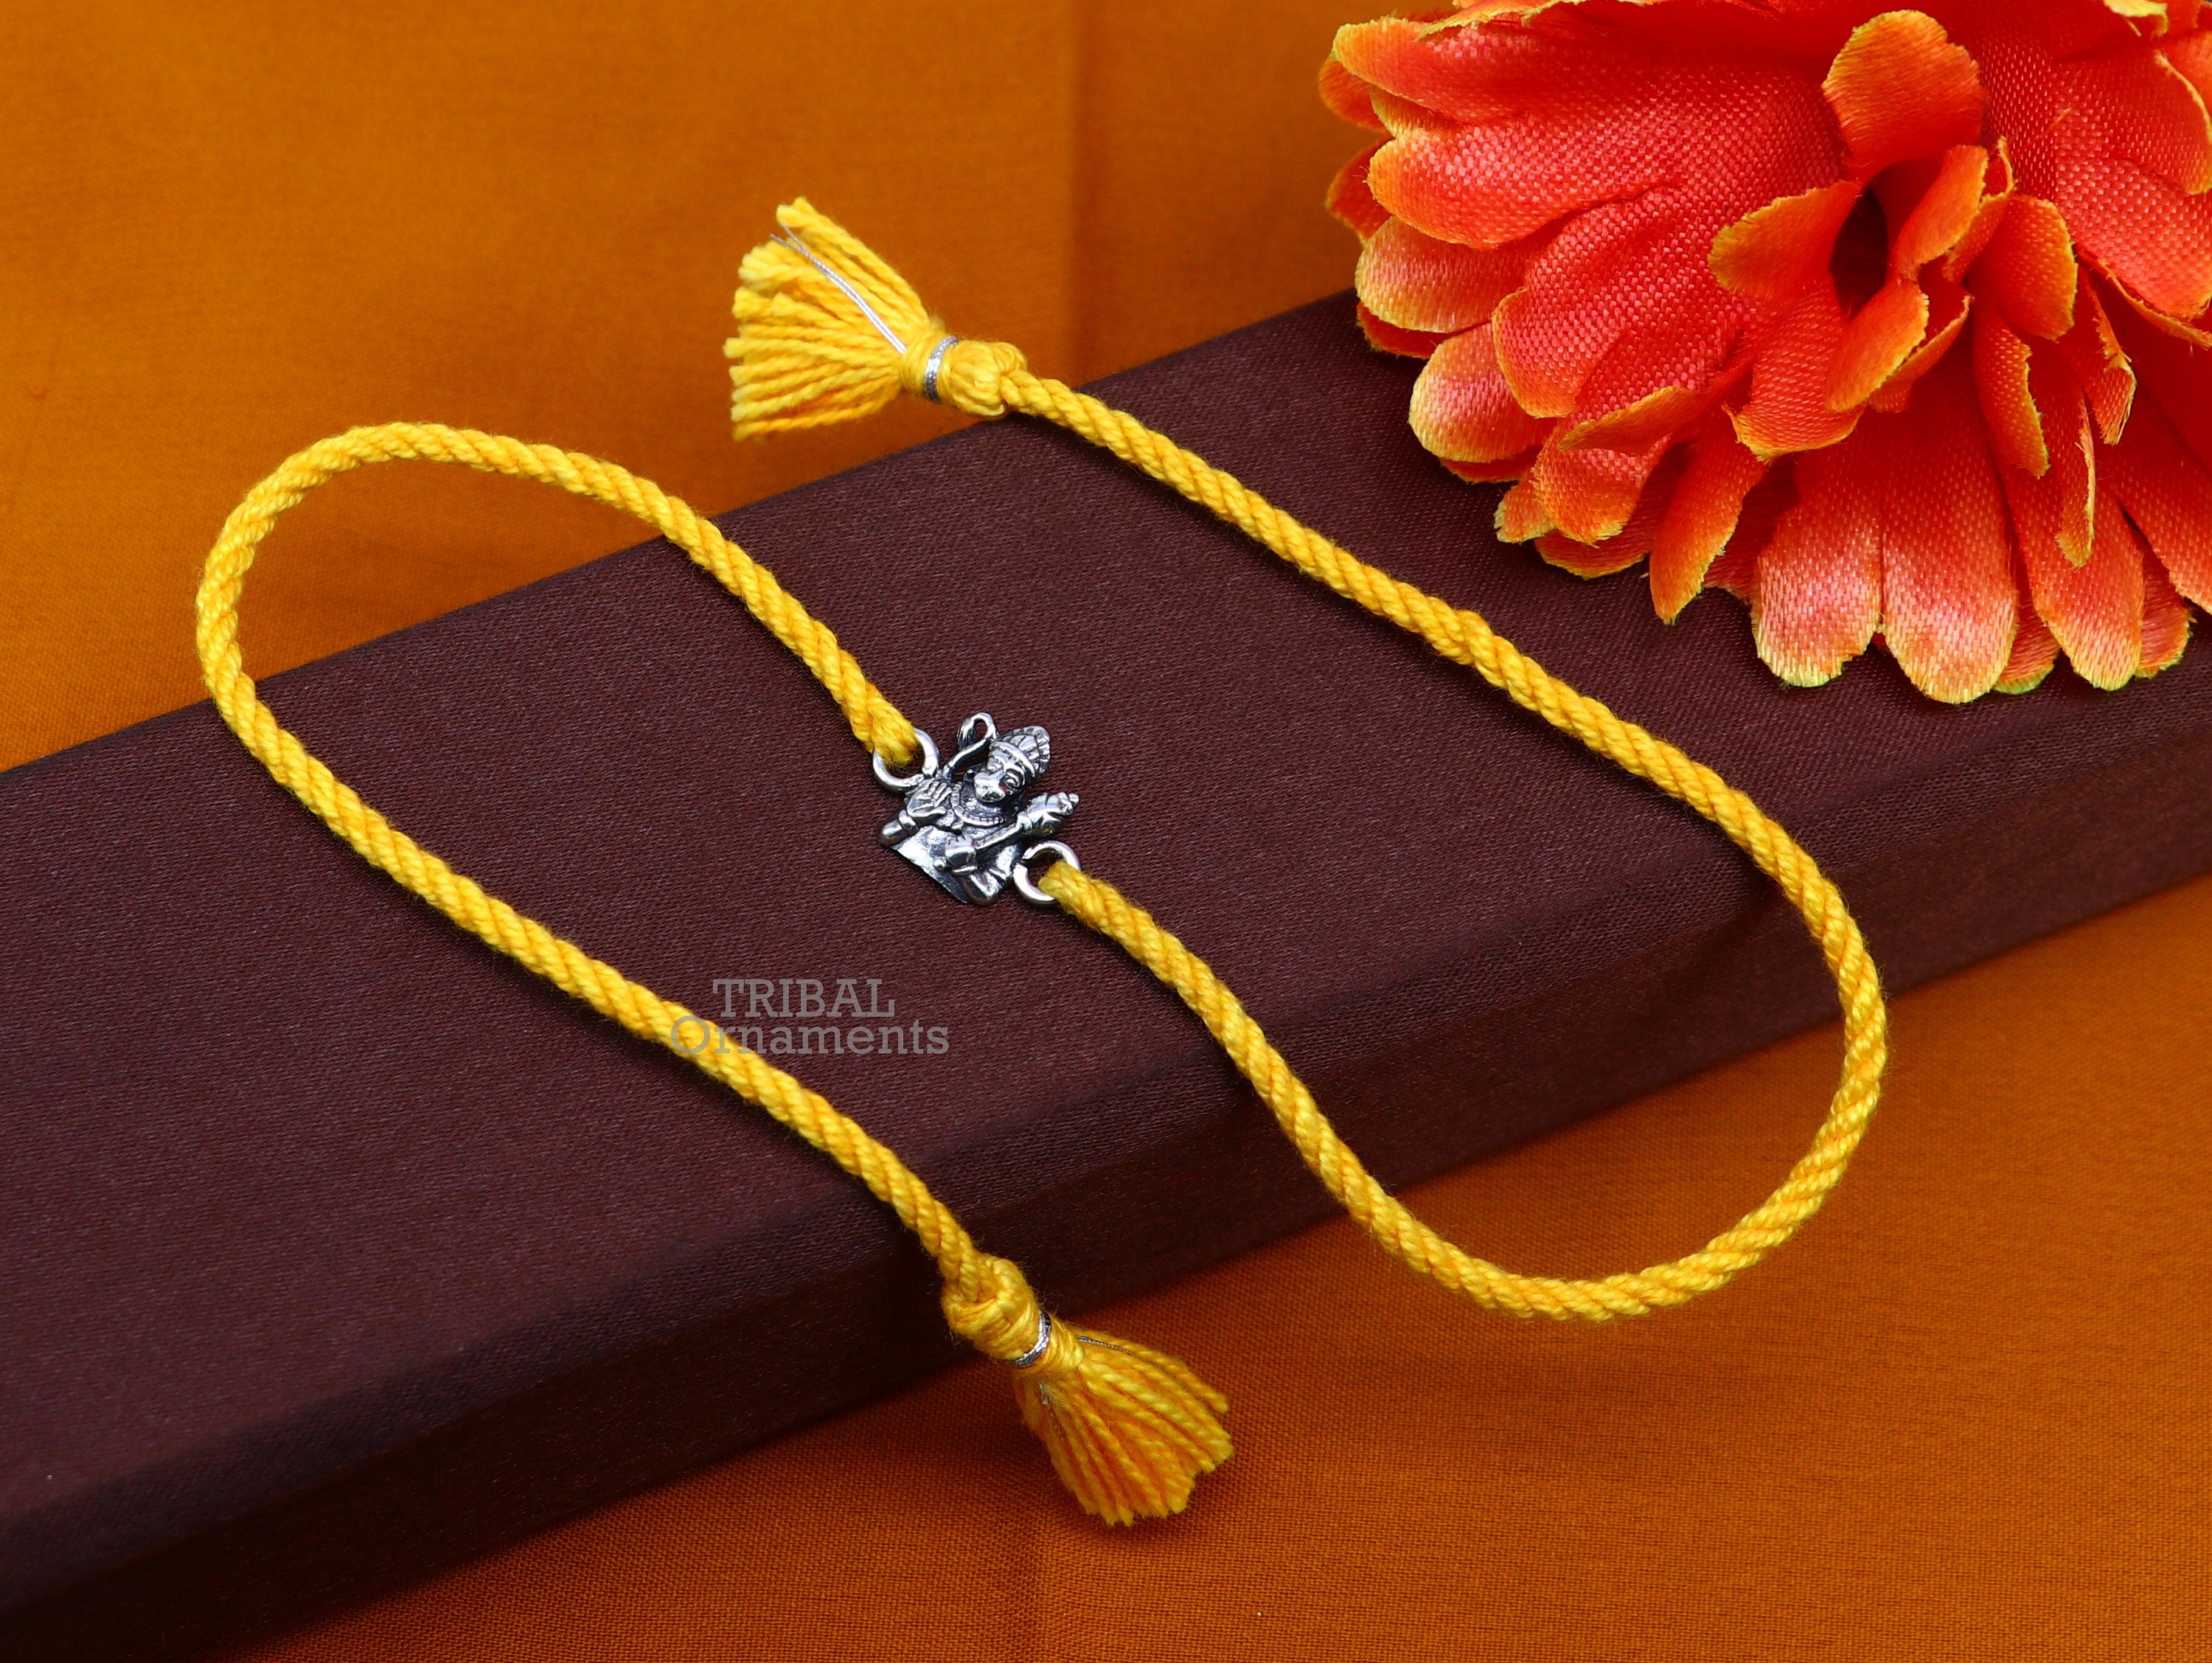 Lotus Flower Bracelet, silver bangle, lotus flower charm bracelet, Hindu  bracelet, rebirth bracelet, spiritual jewelry, purity awaken bangle |  Silver bangles, Spiritual jewelry, Lotus flower charm